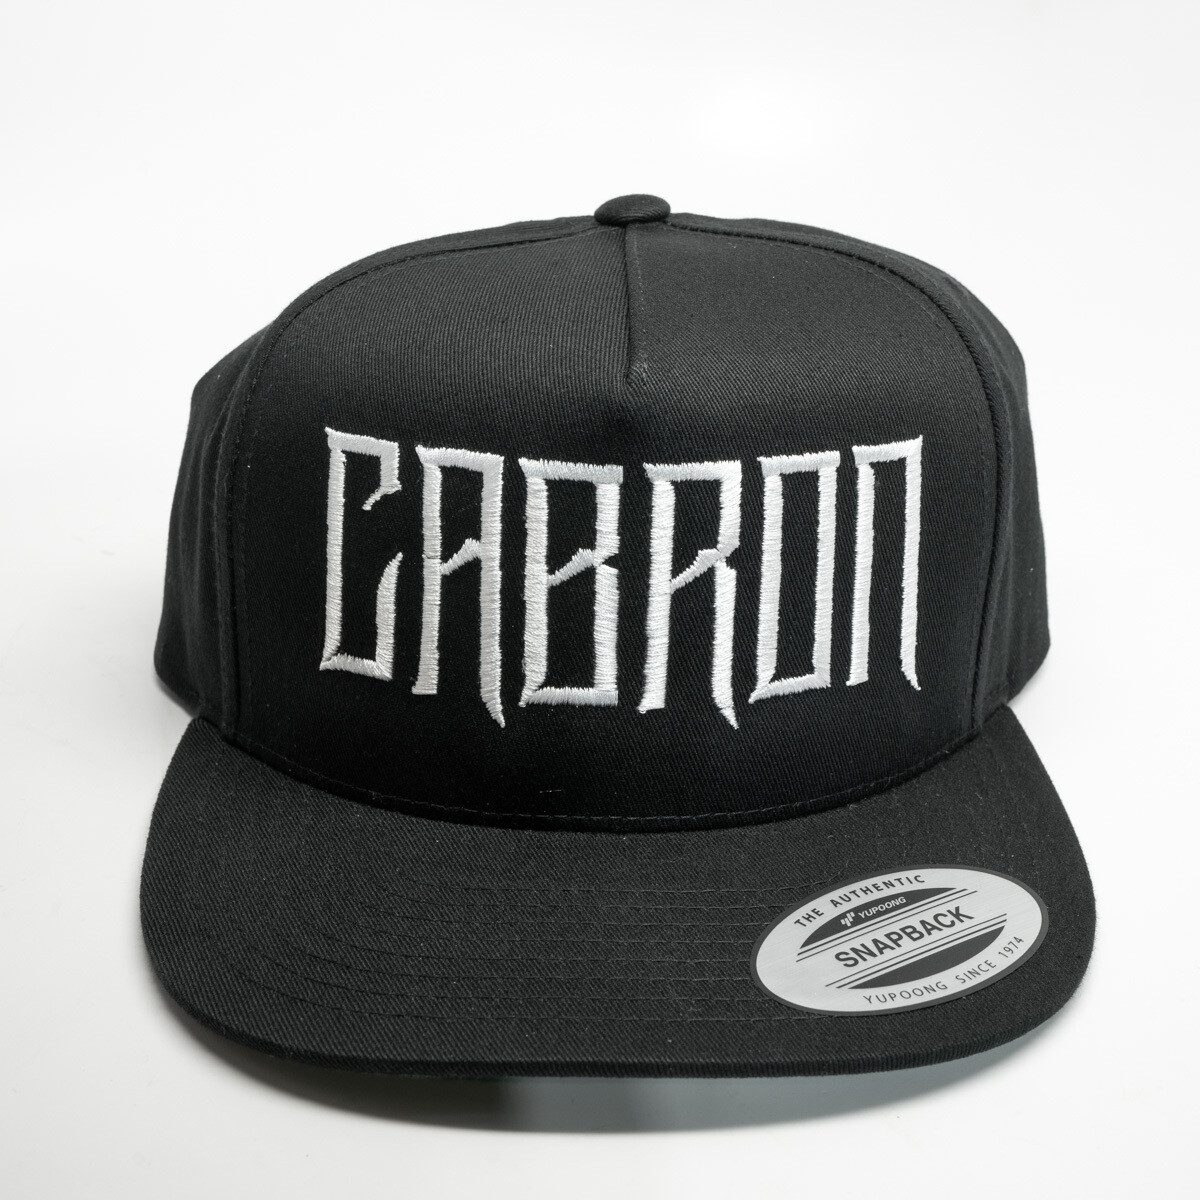 Cabron - Snapback Hat